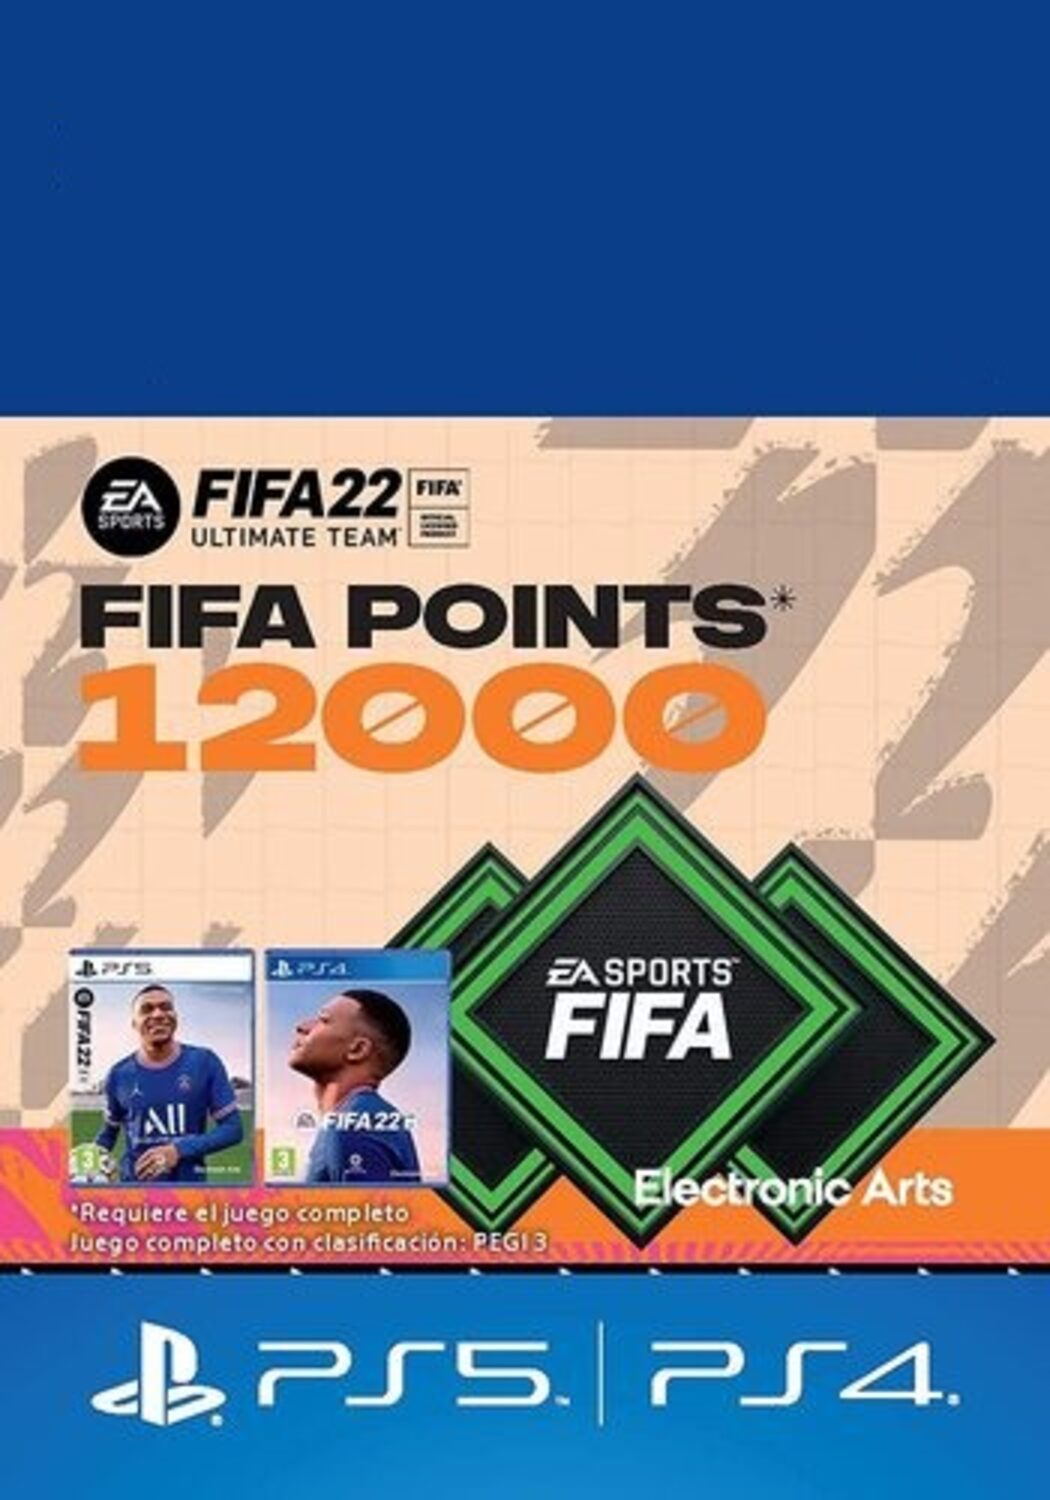 Vorming diameter kampioen Buy FIFA 22 - 12000 FUT Points PSN Key | Cheap | UK | ENEBA